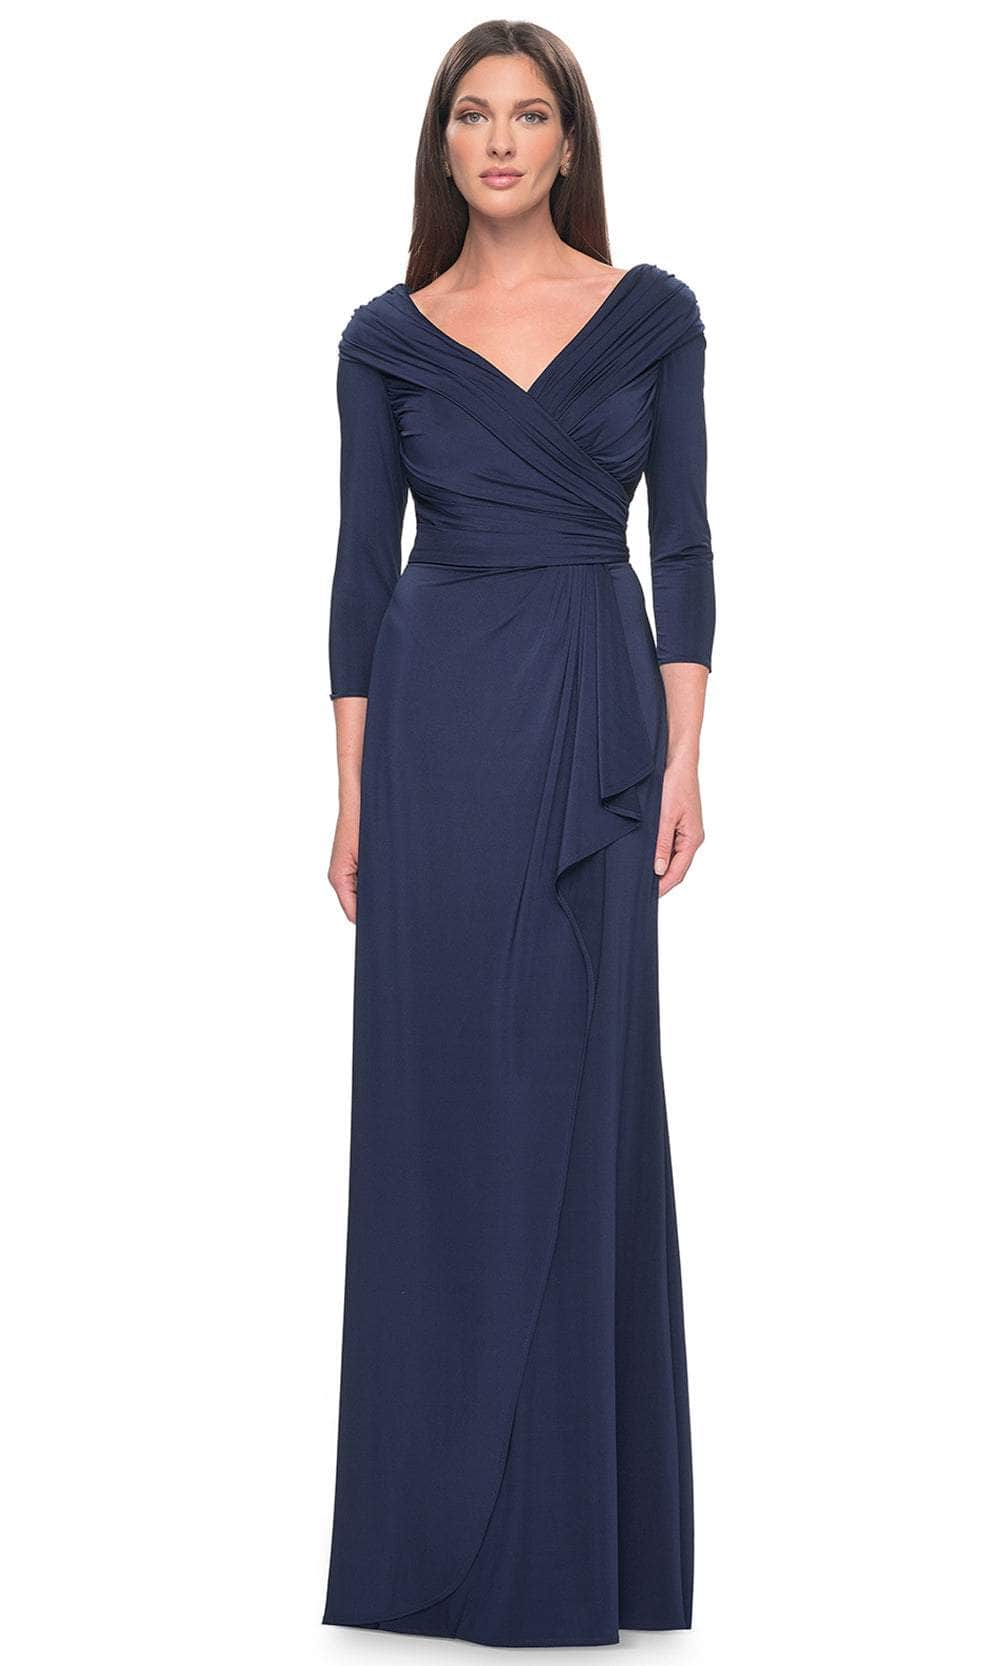 La Femme 30845 - Draped Sash Evening Dress Evening Dresses